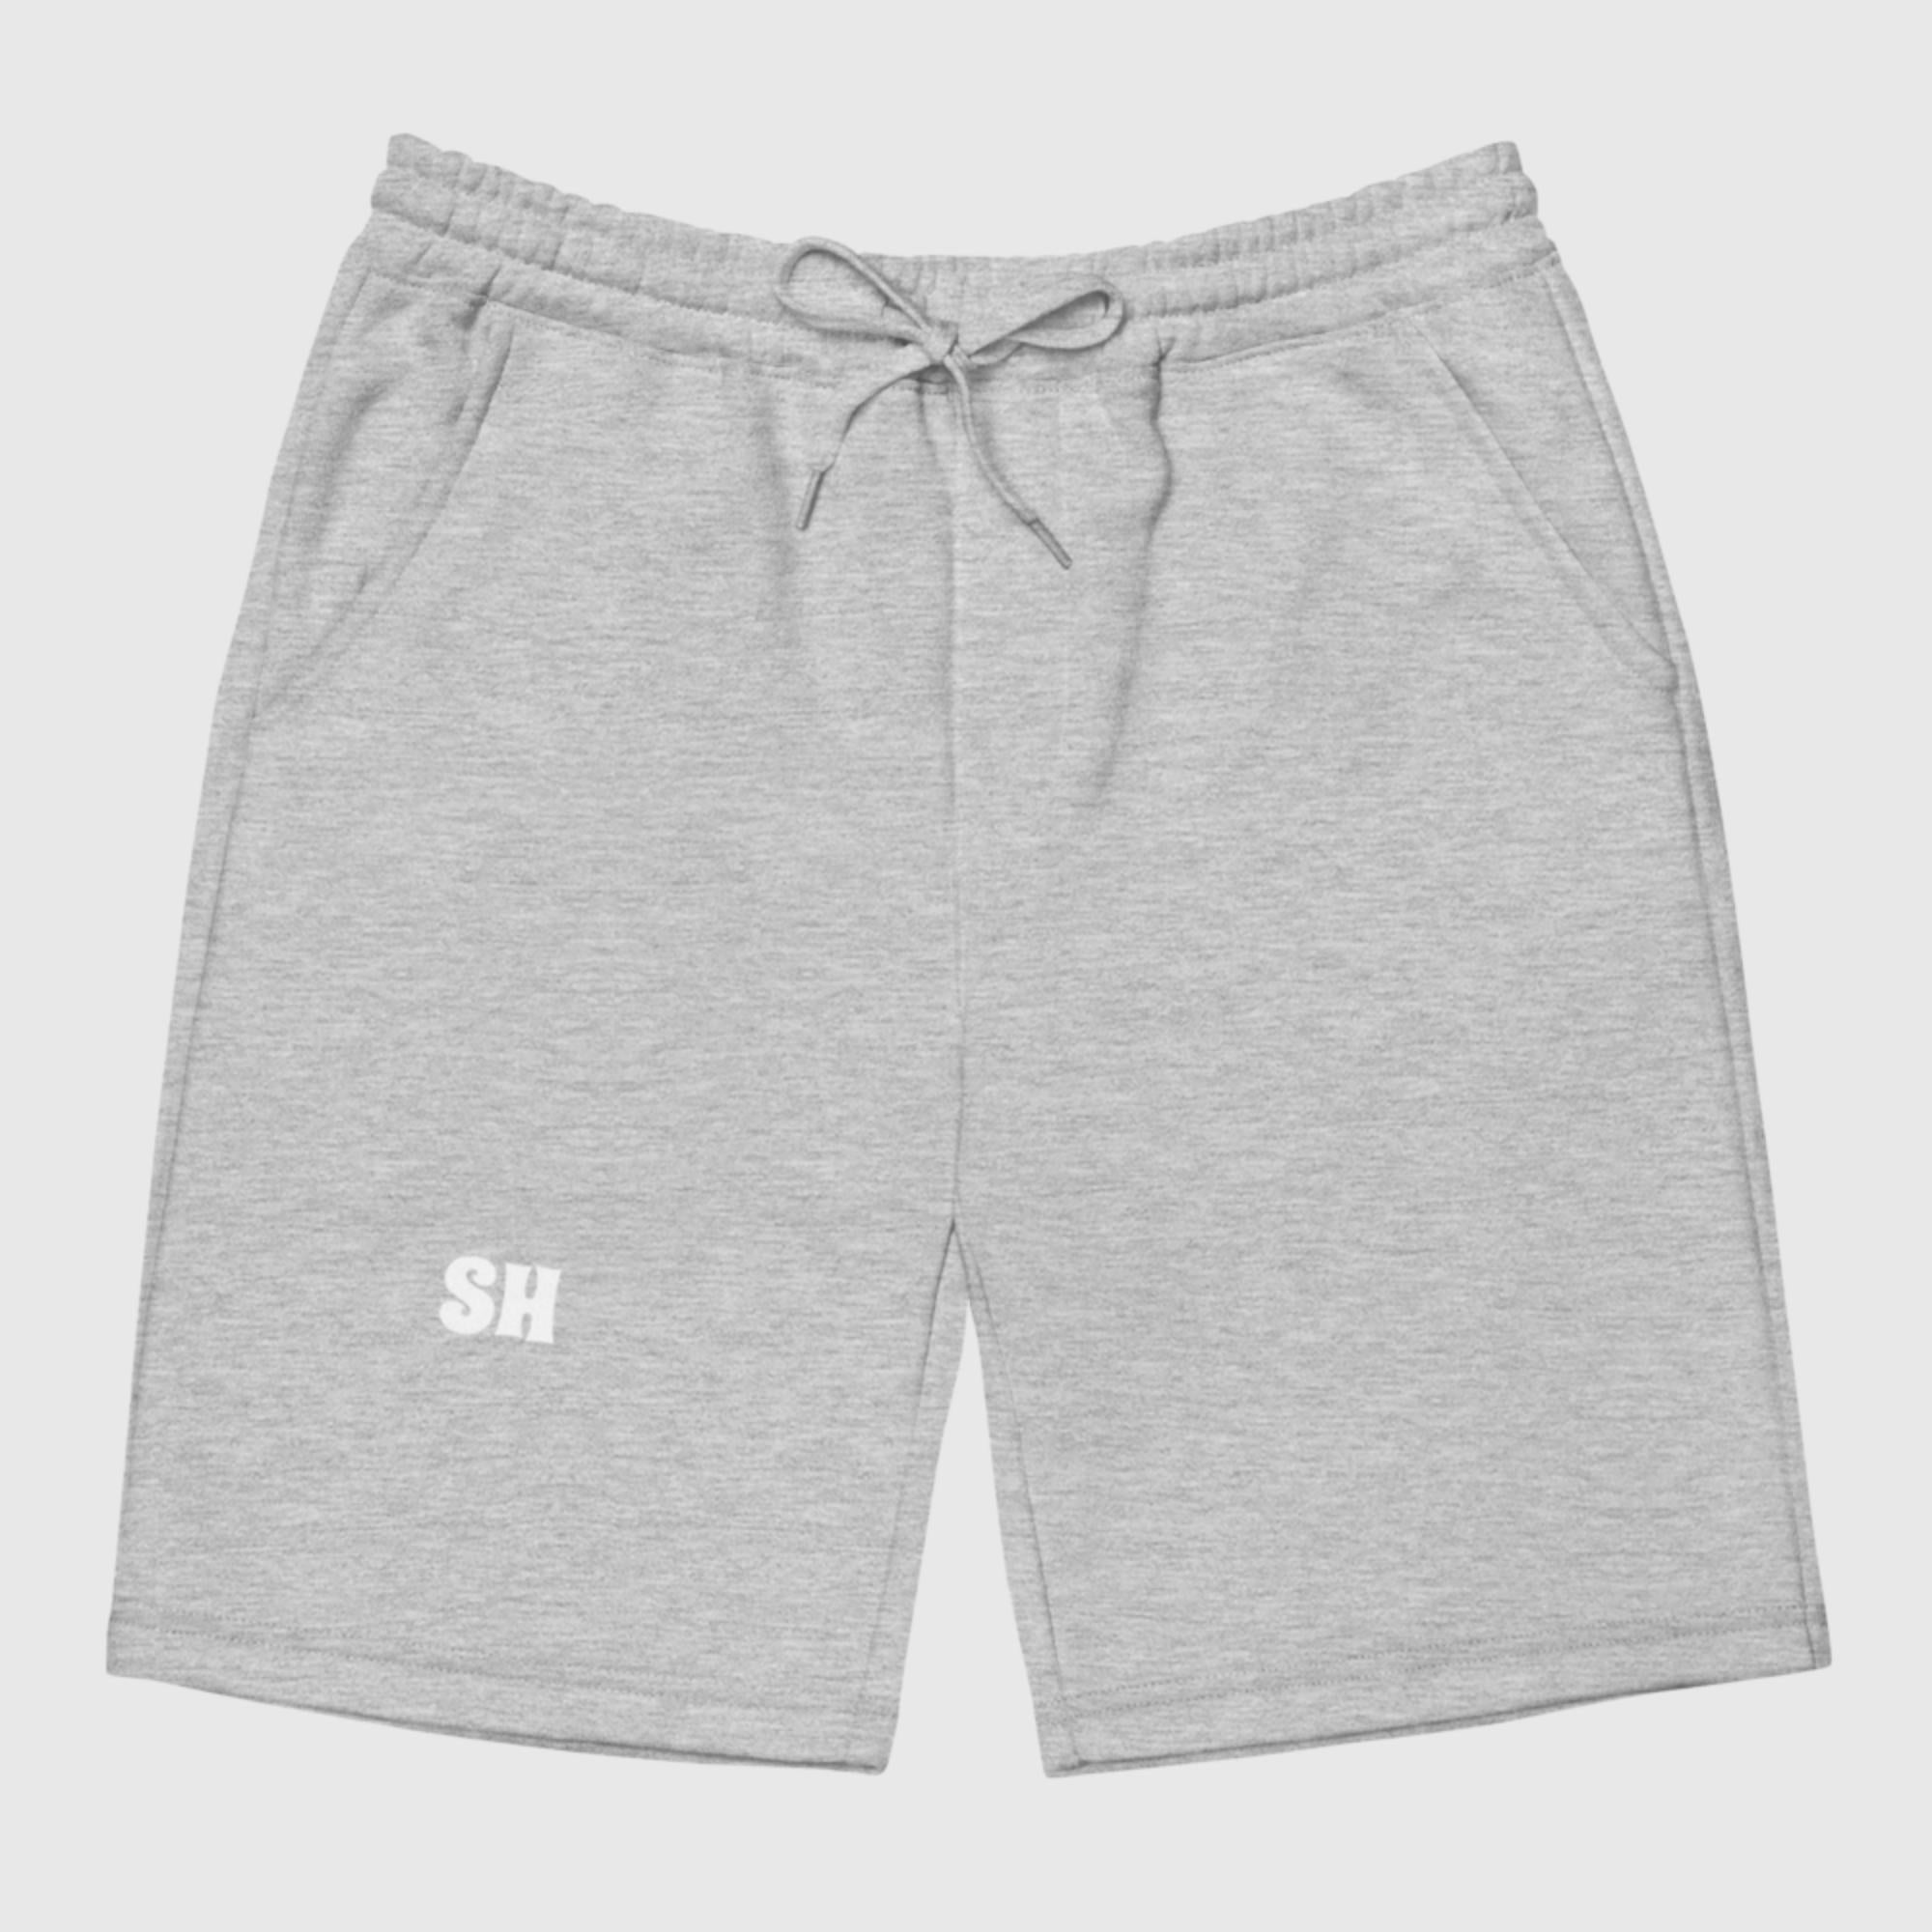 Men's fleece shorts - Grey - Sunset Harbor Clothing